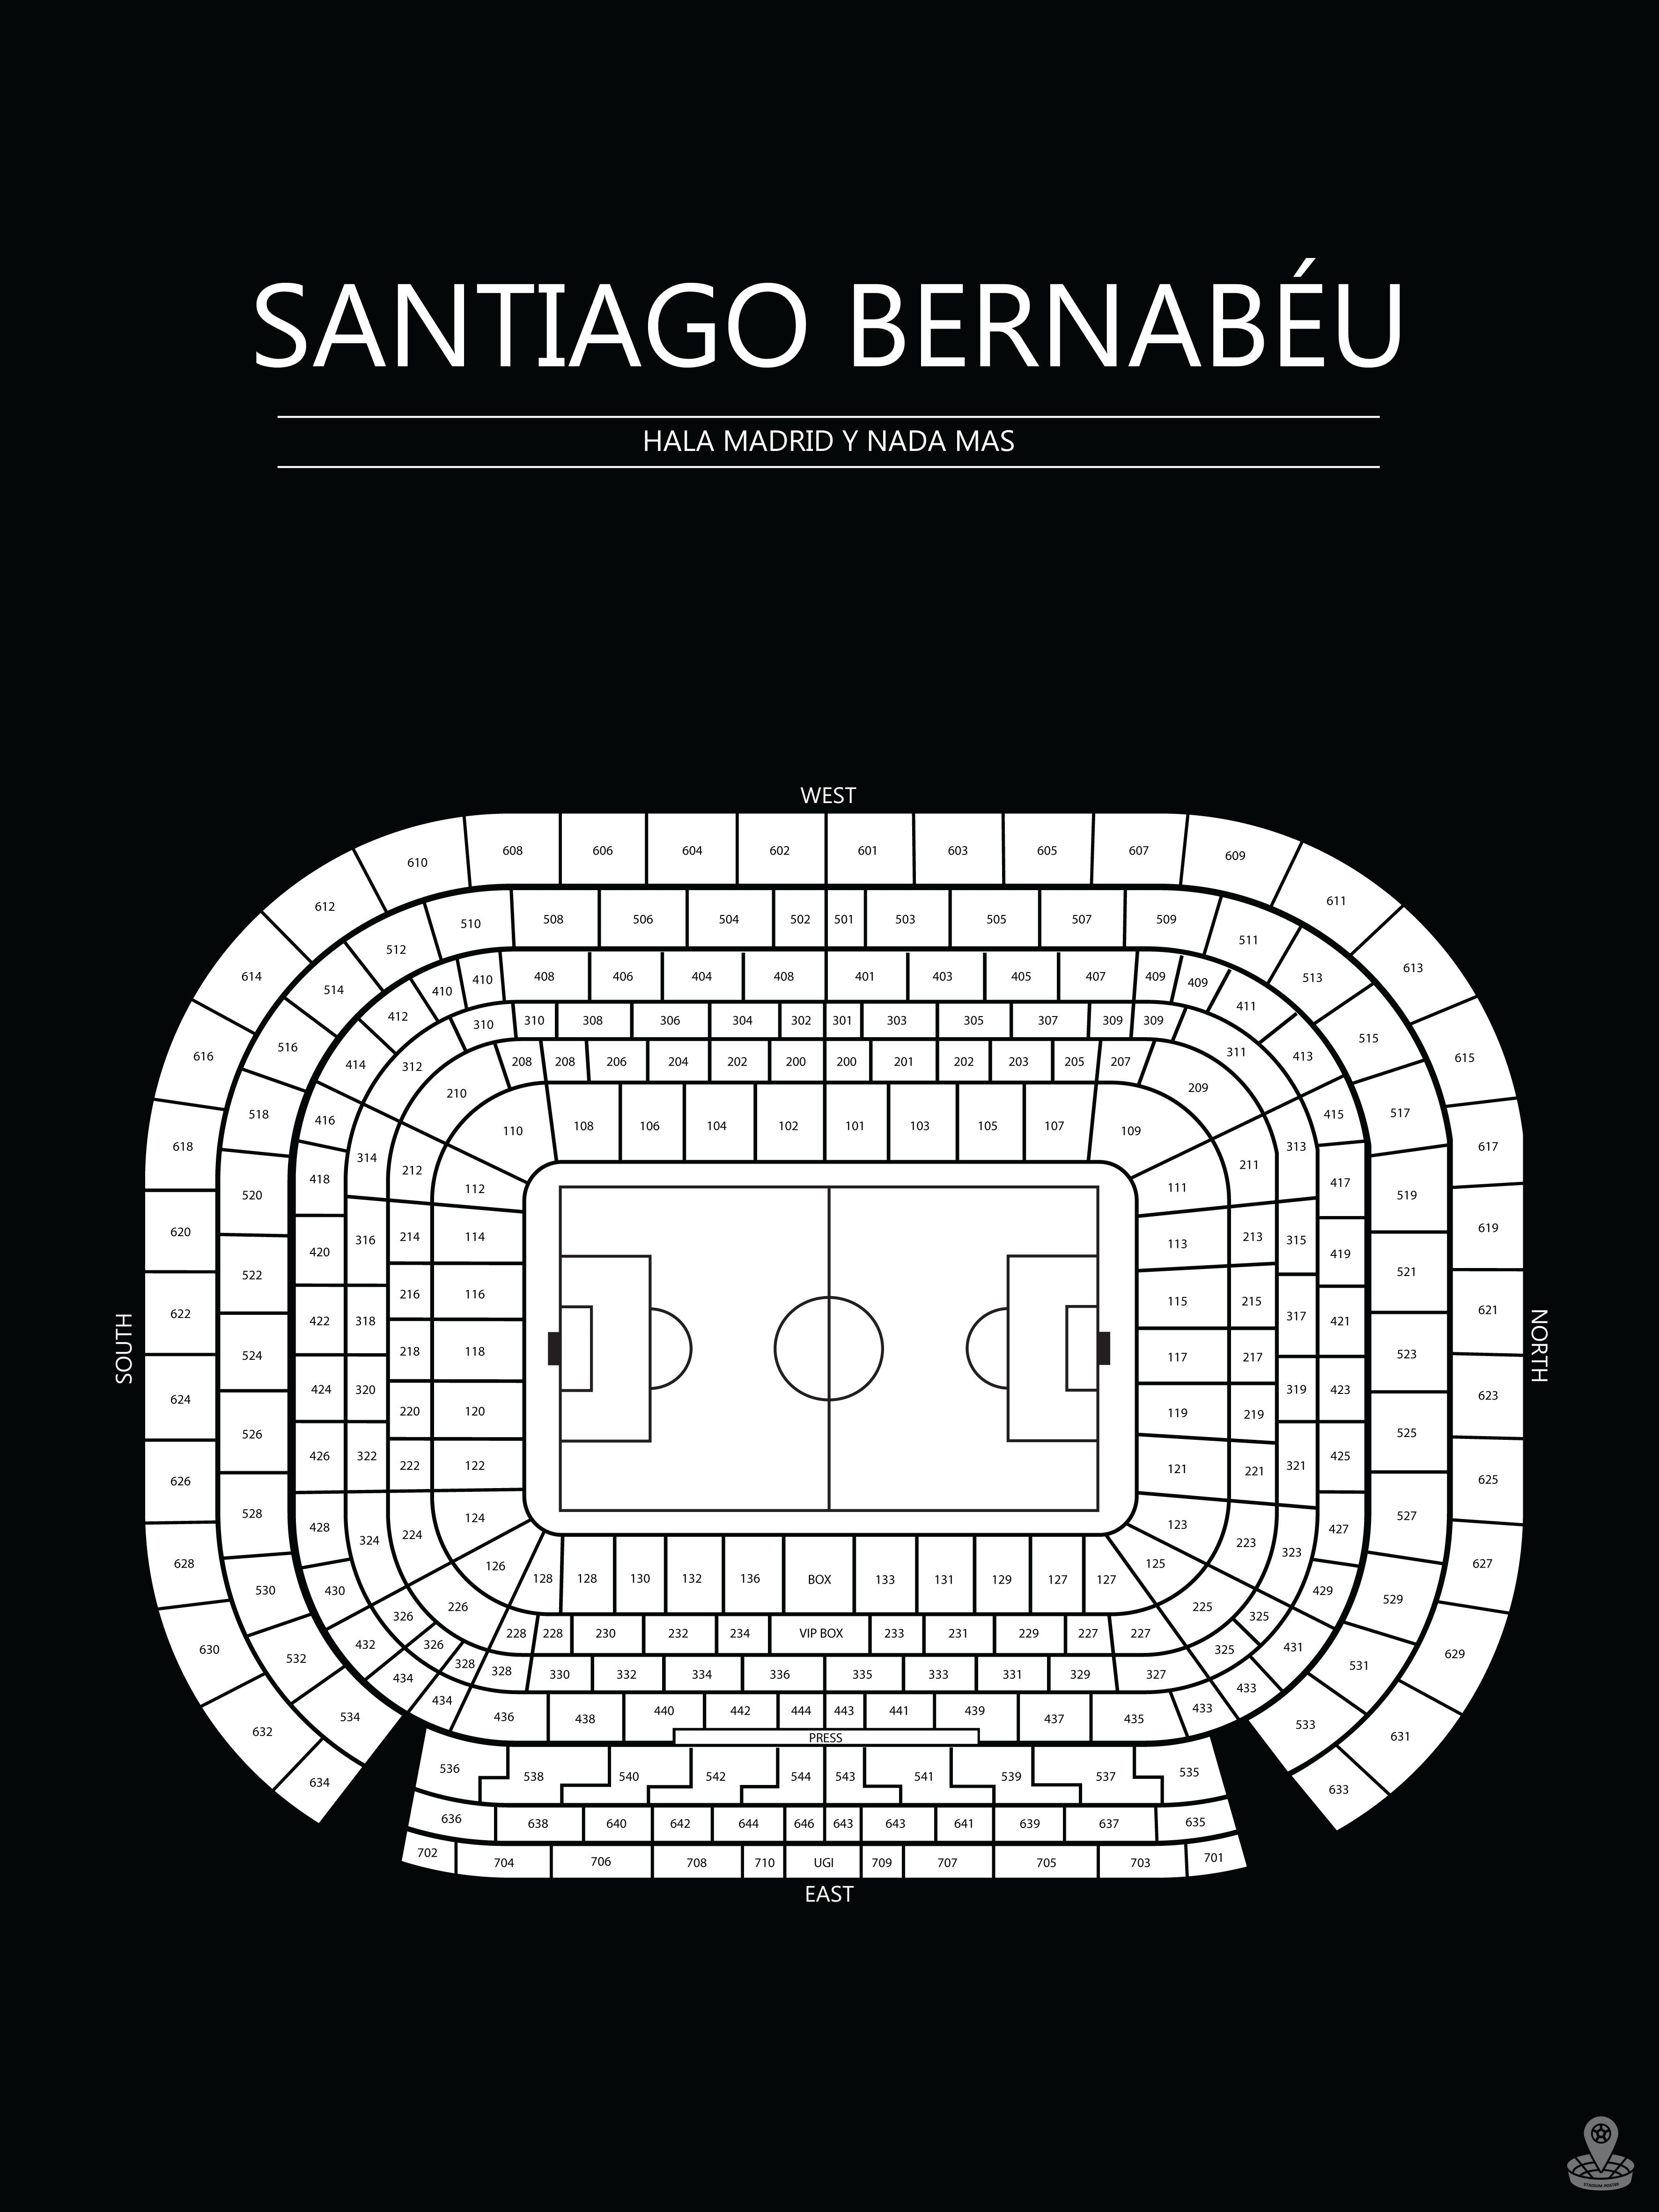 Fodbold plakat Real Madrid Santiago Bernabeu Sort